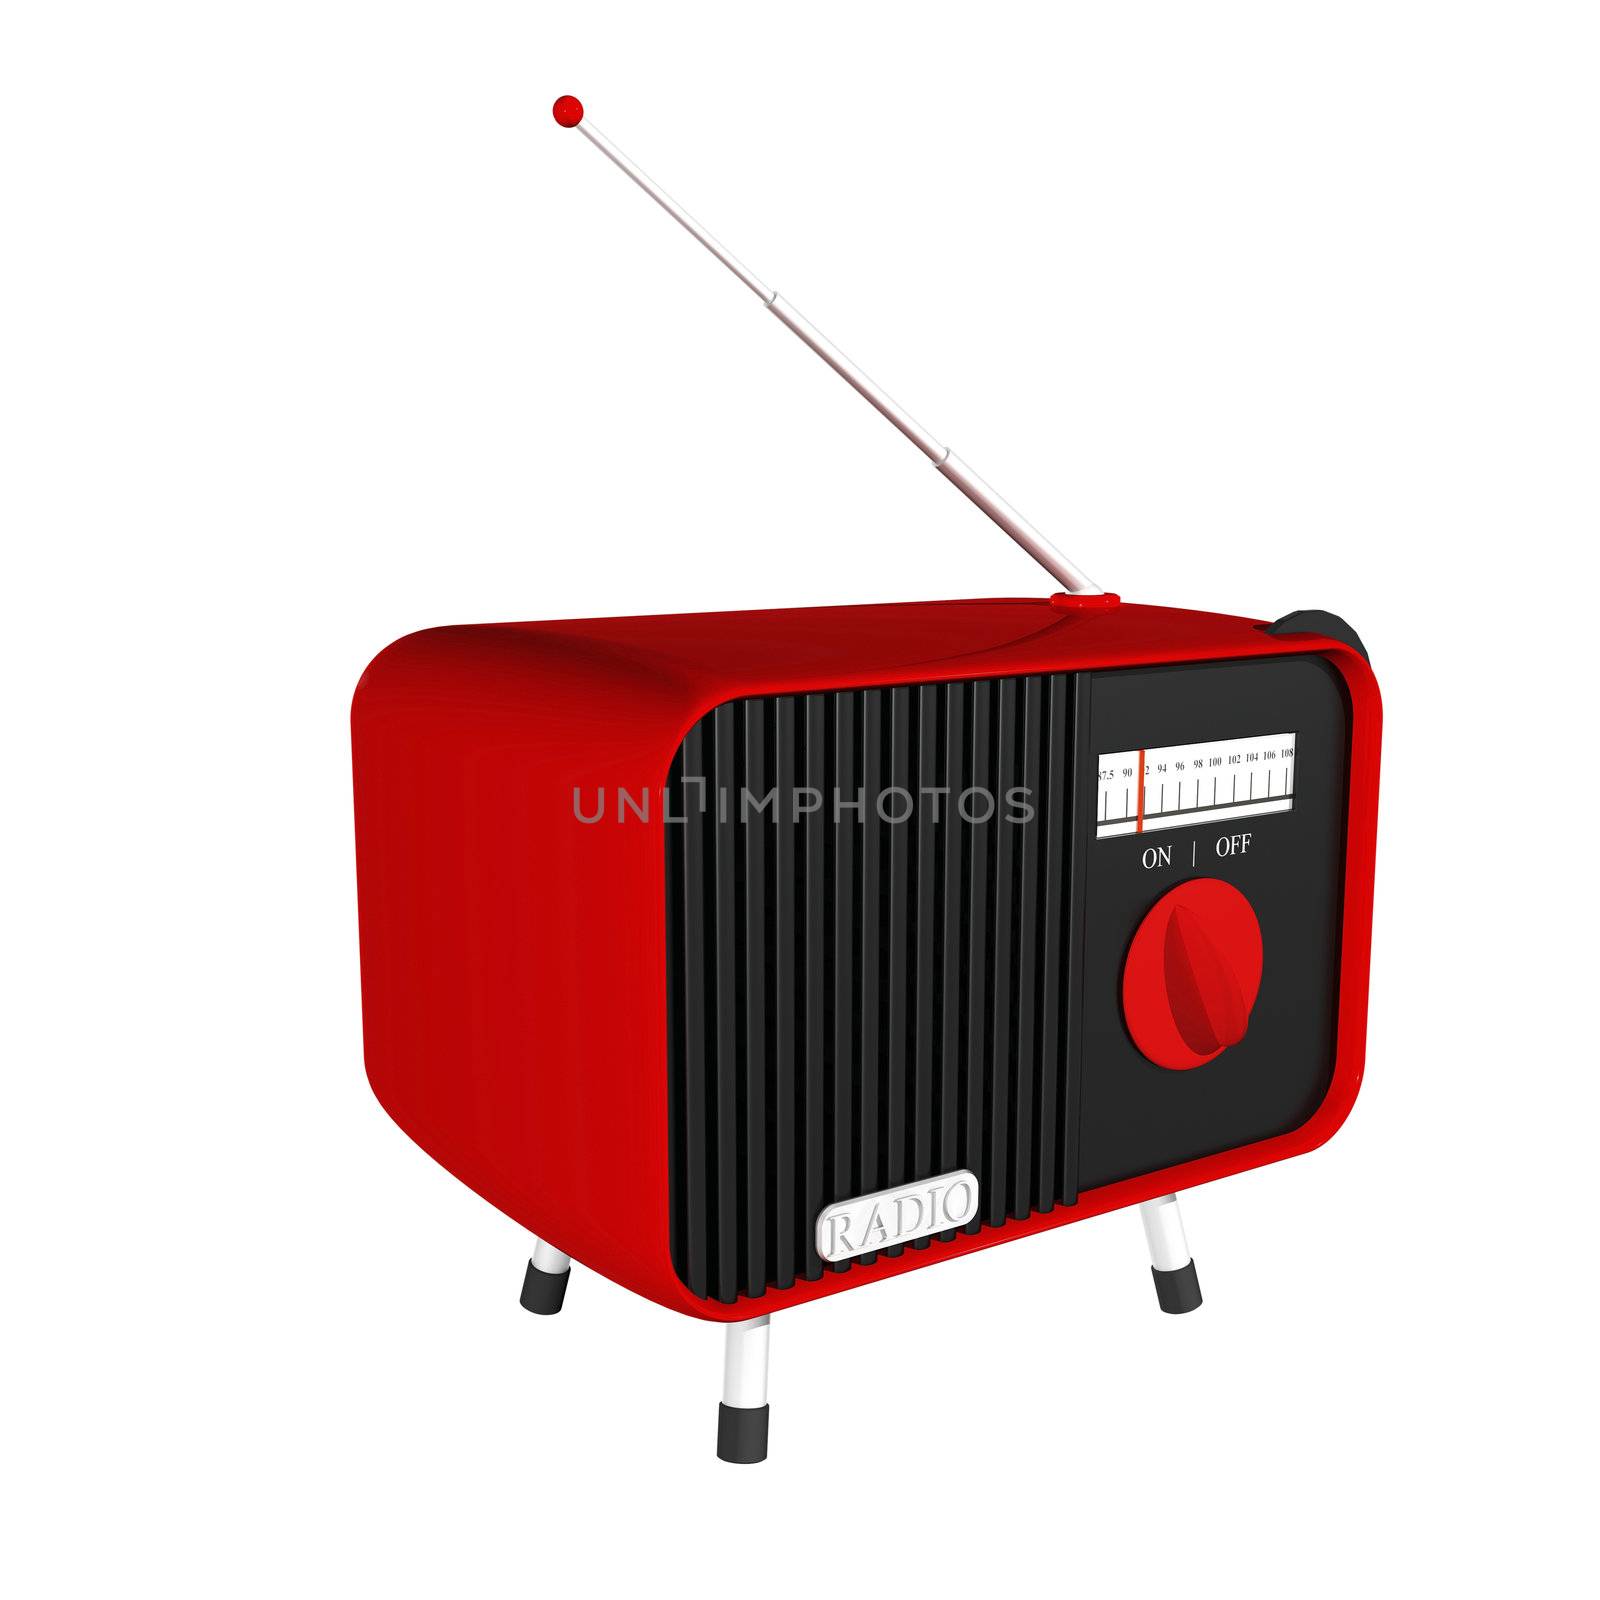 3d illustration of a red retro radio